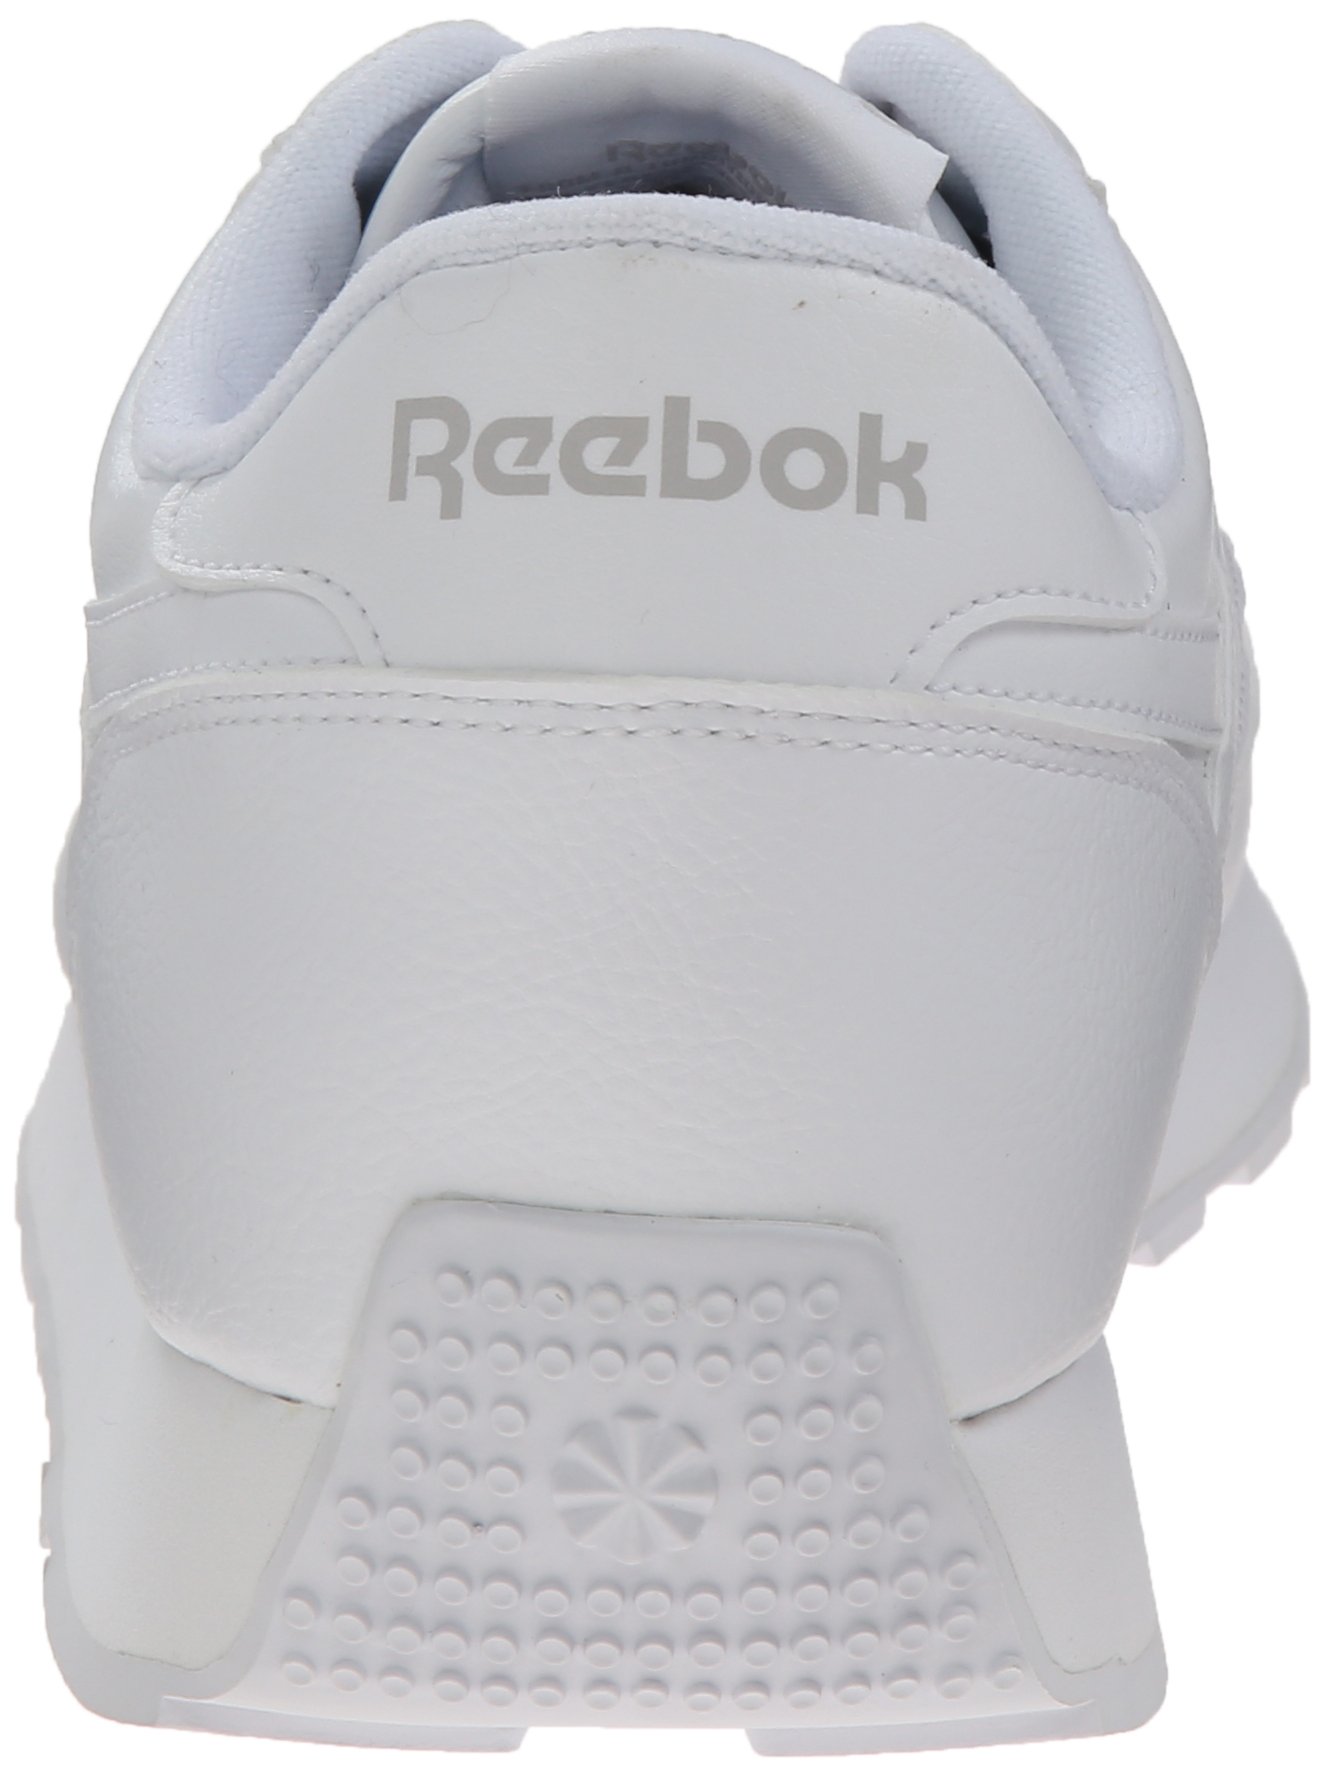 Reebok Men's Classic Renaissance Sneaker